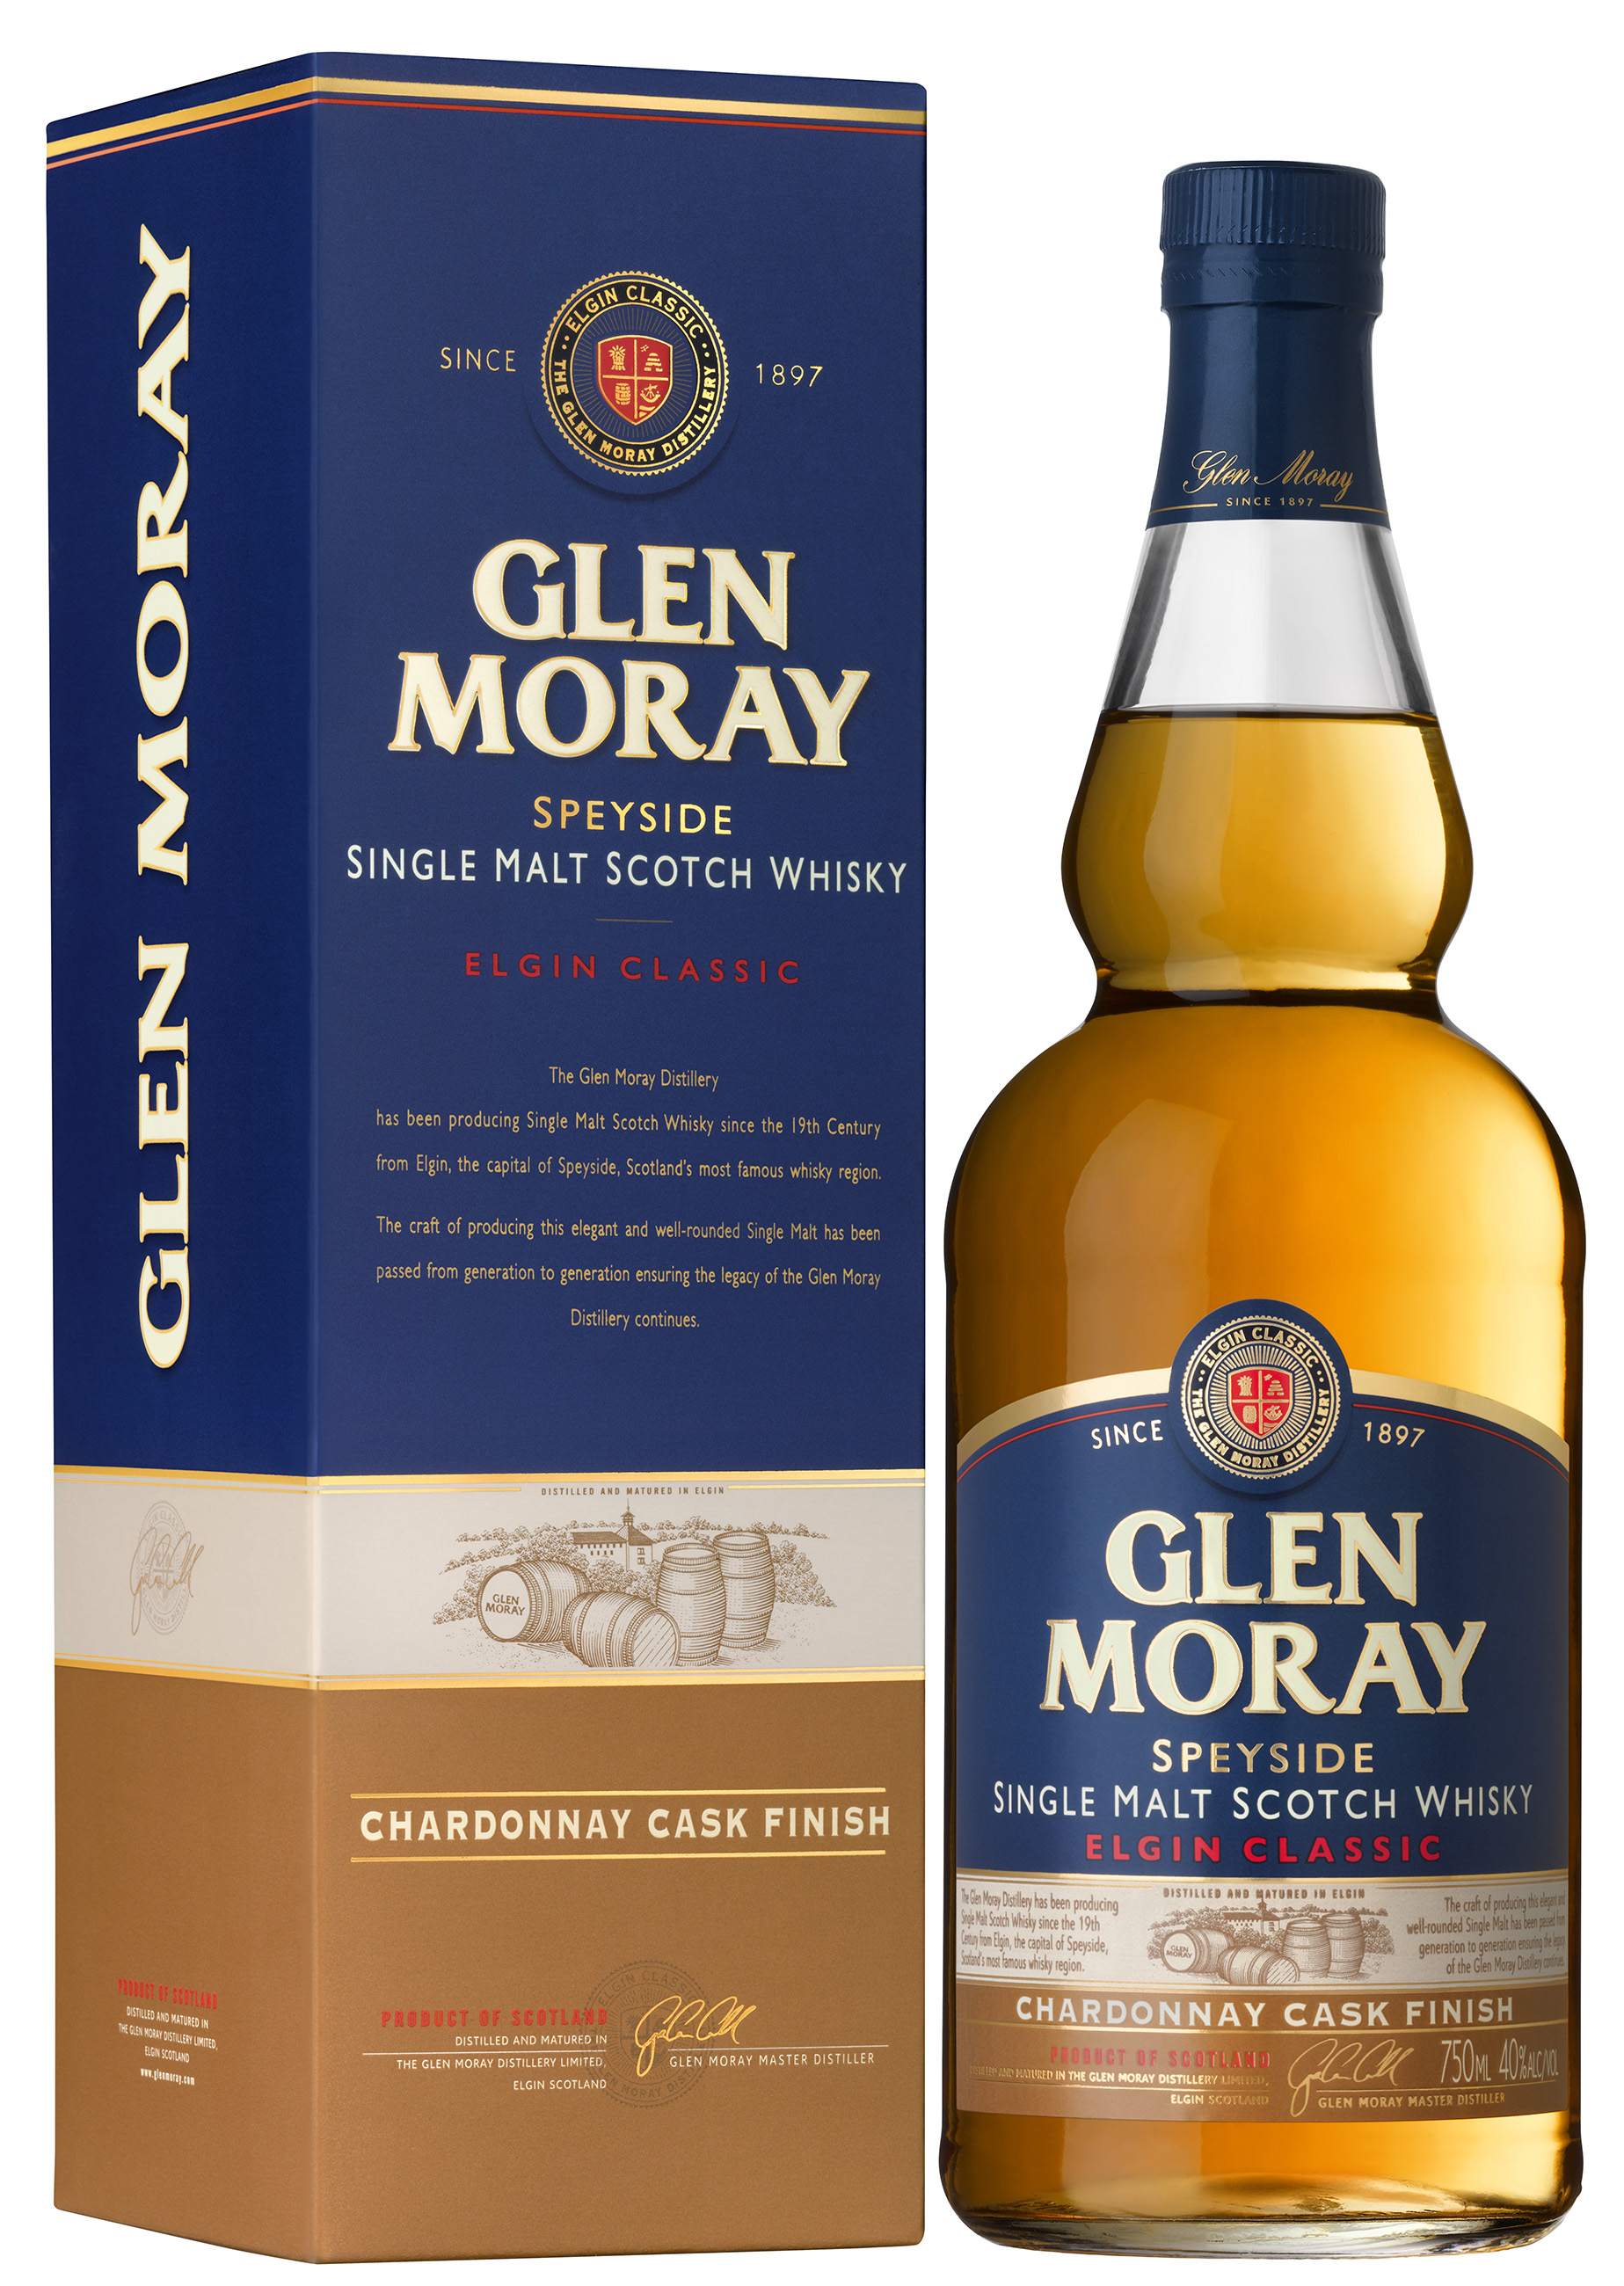 Glen Moray Does a Twist on Chardonnay with its New Single Malt Scotch